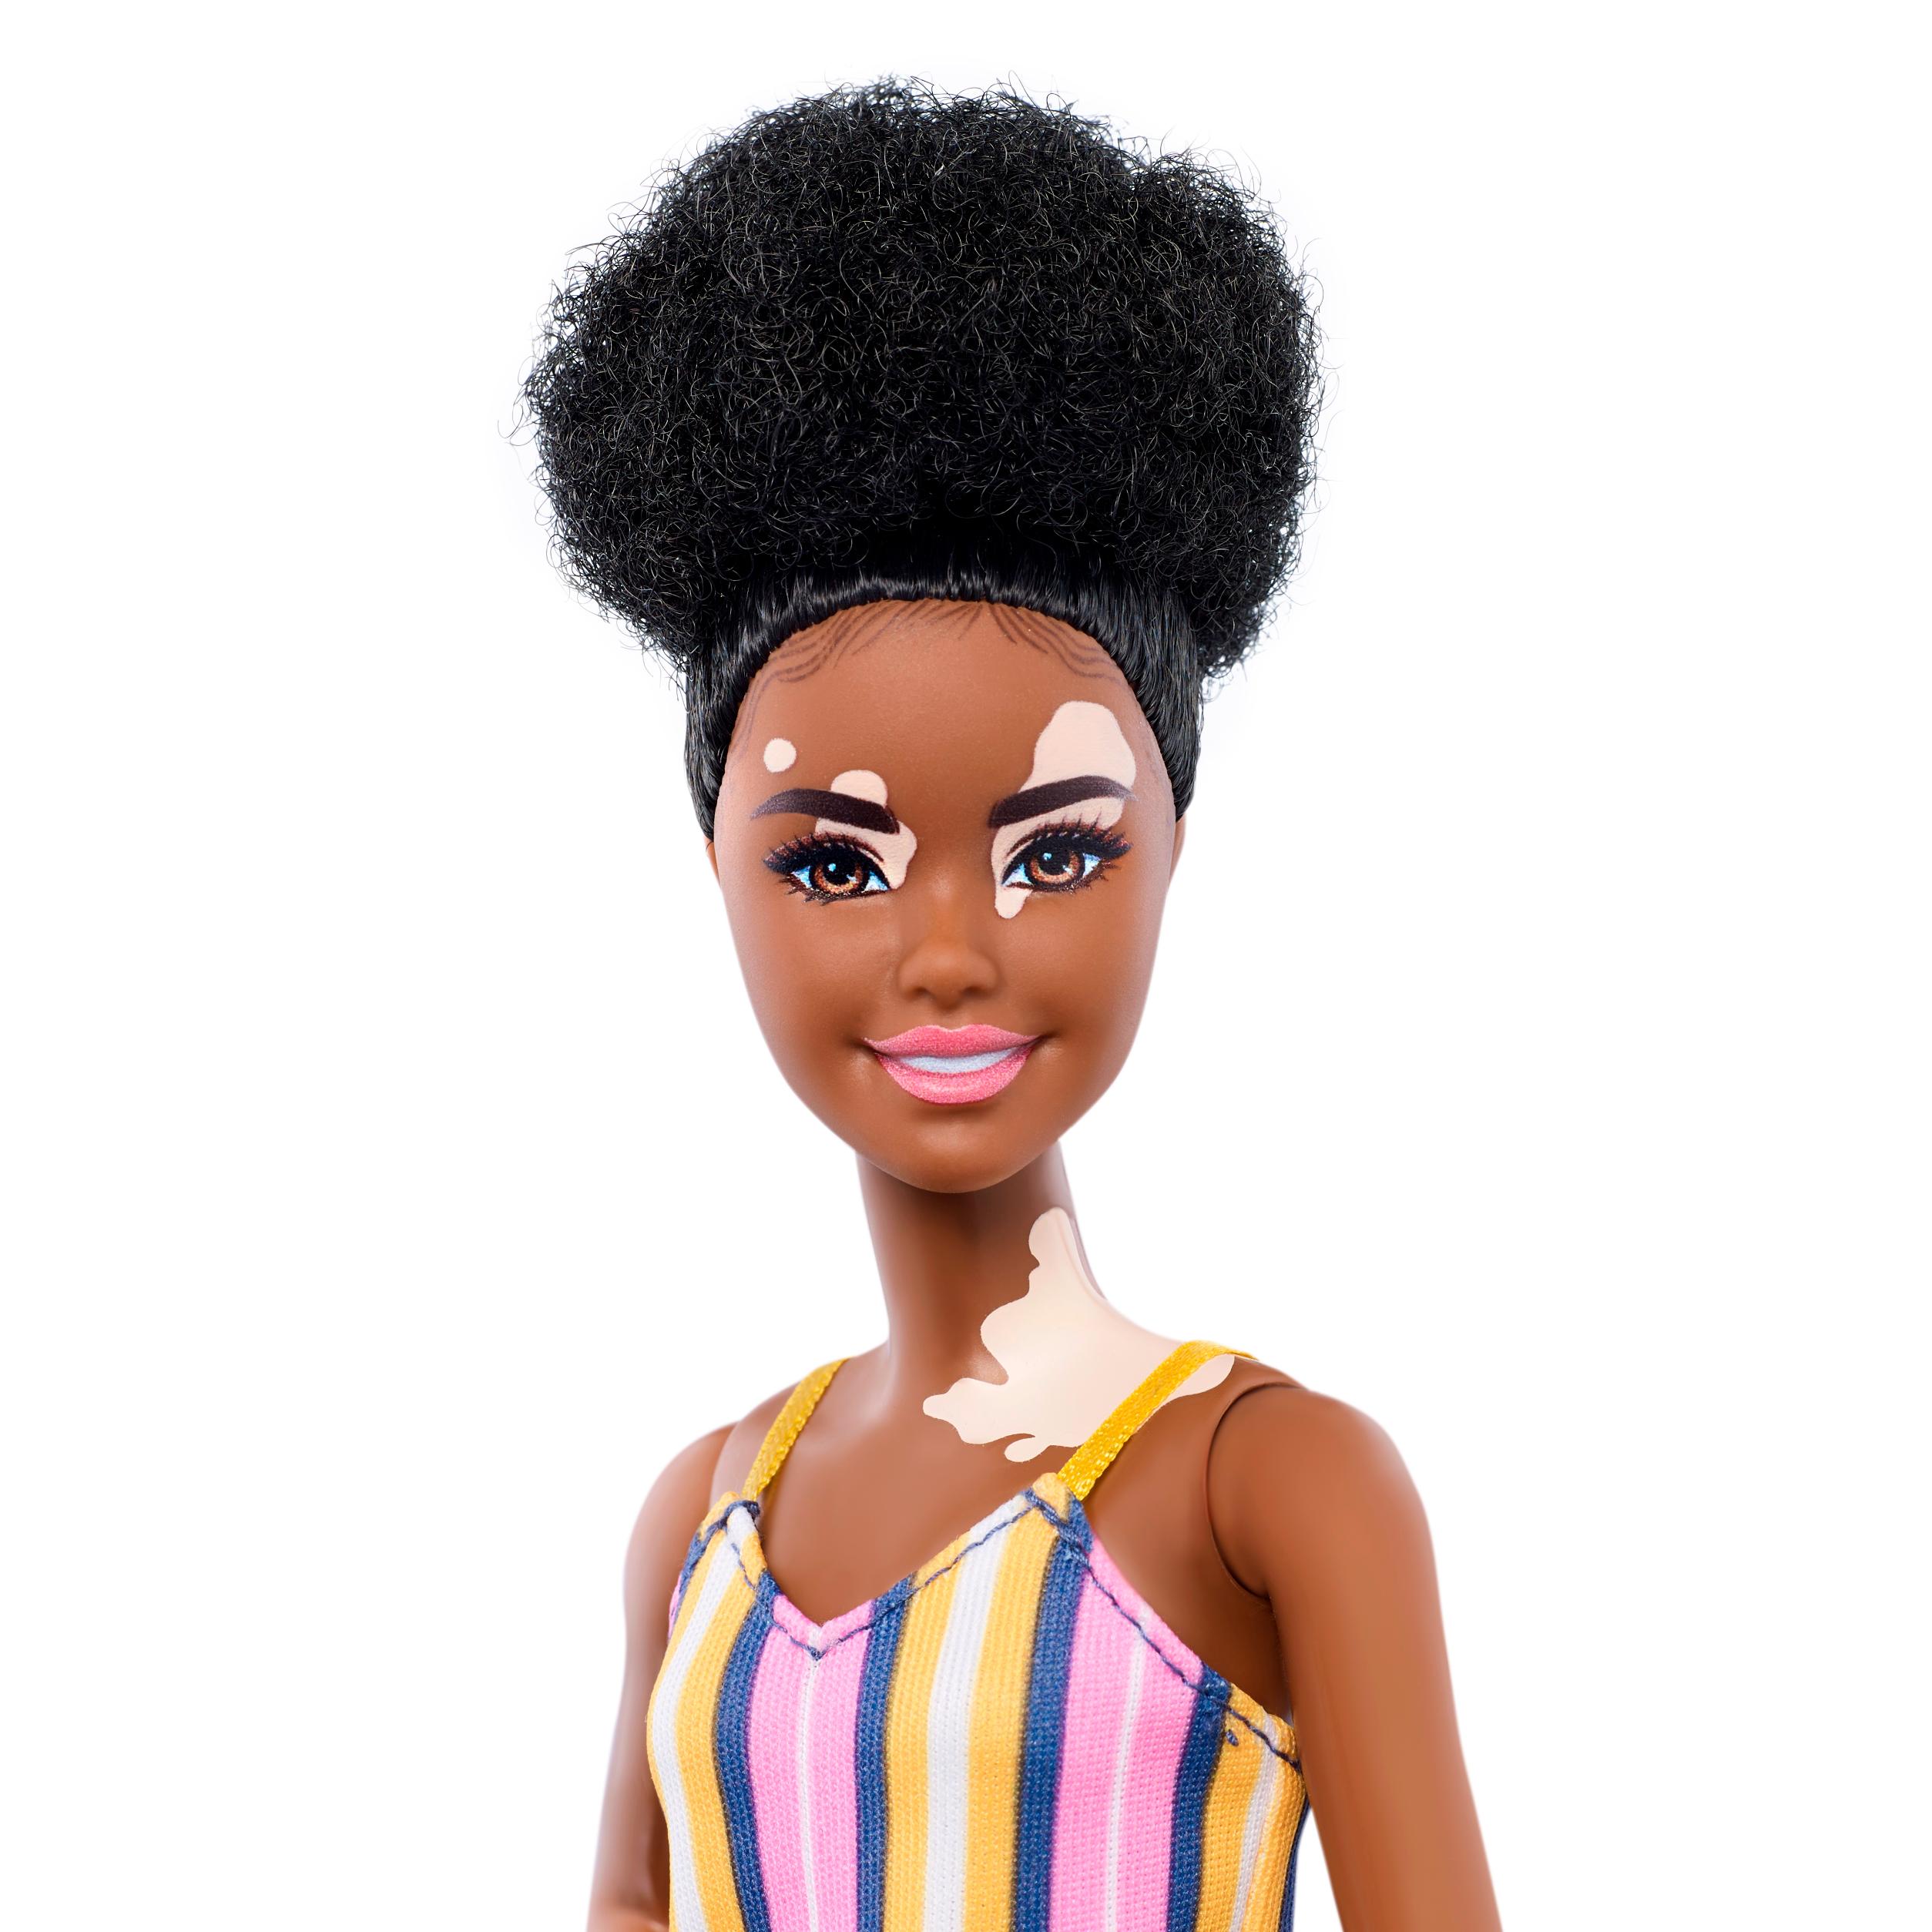 New Barbie dolls feature vitiligo and hairless models - CNN Style